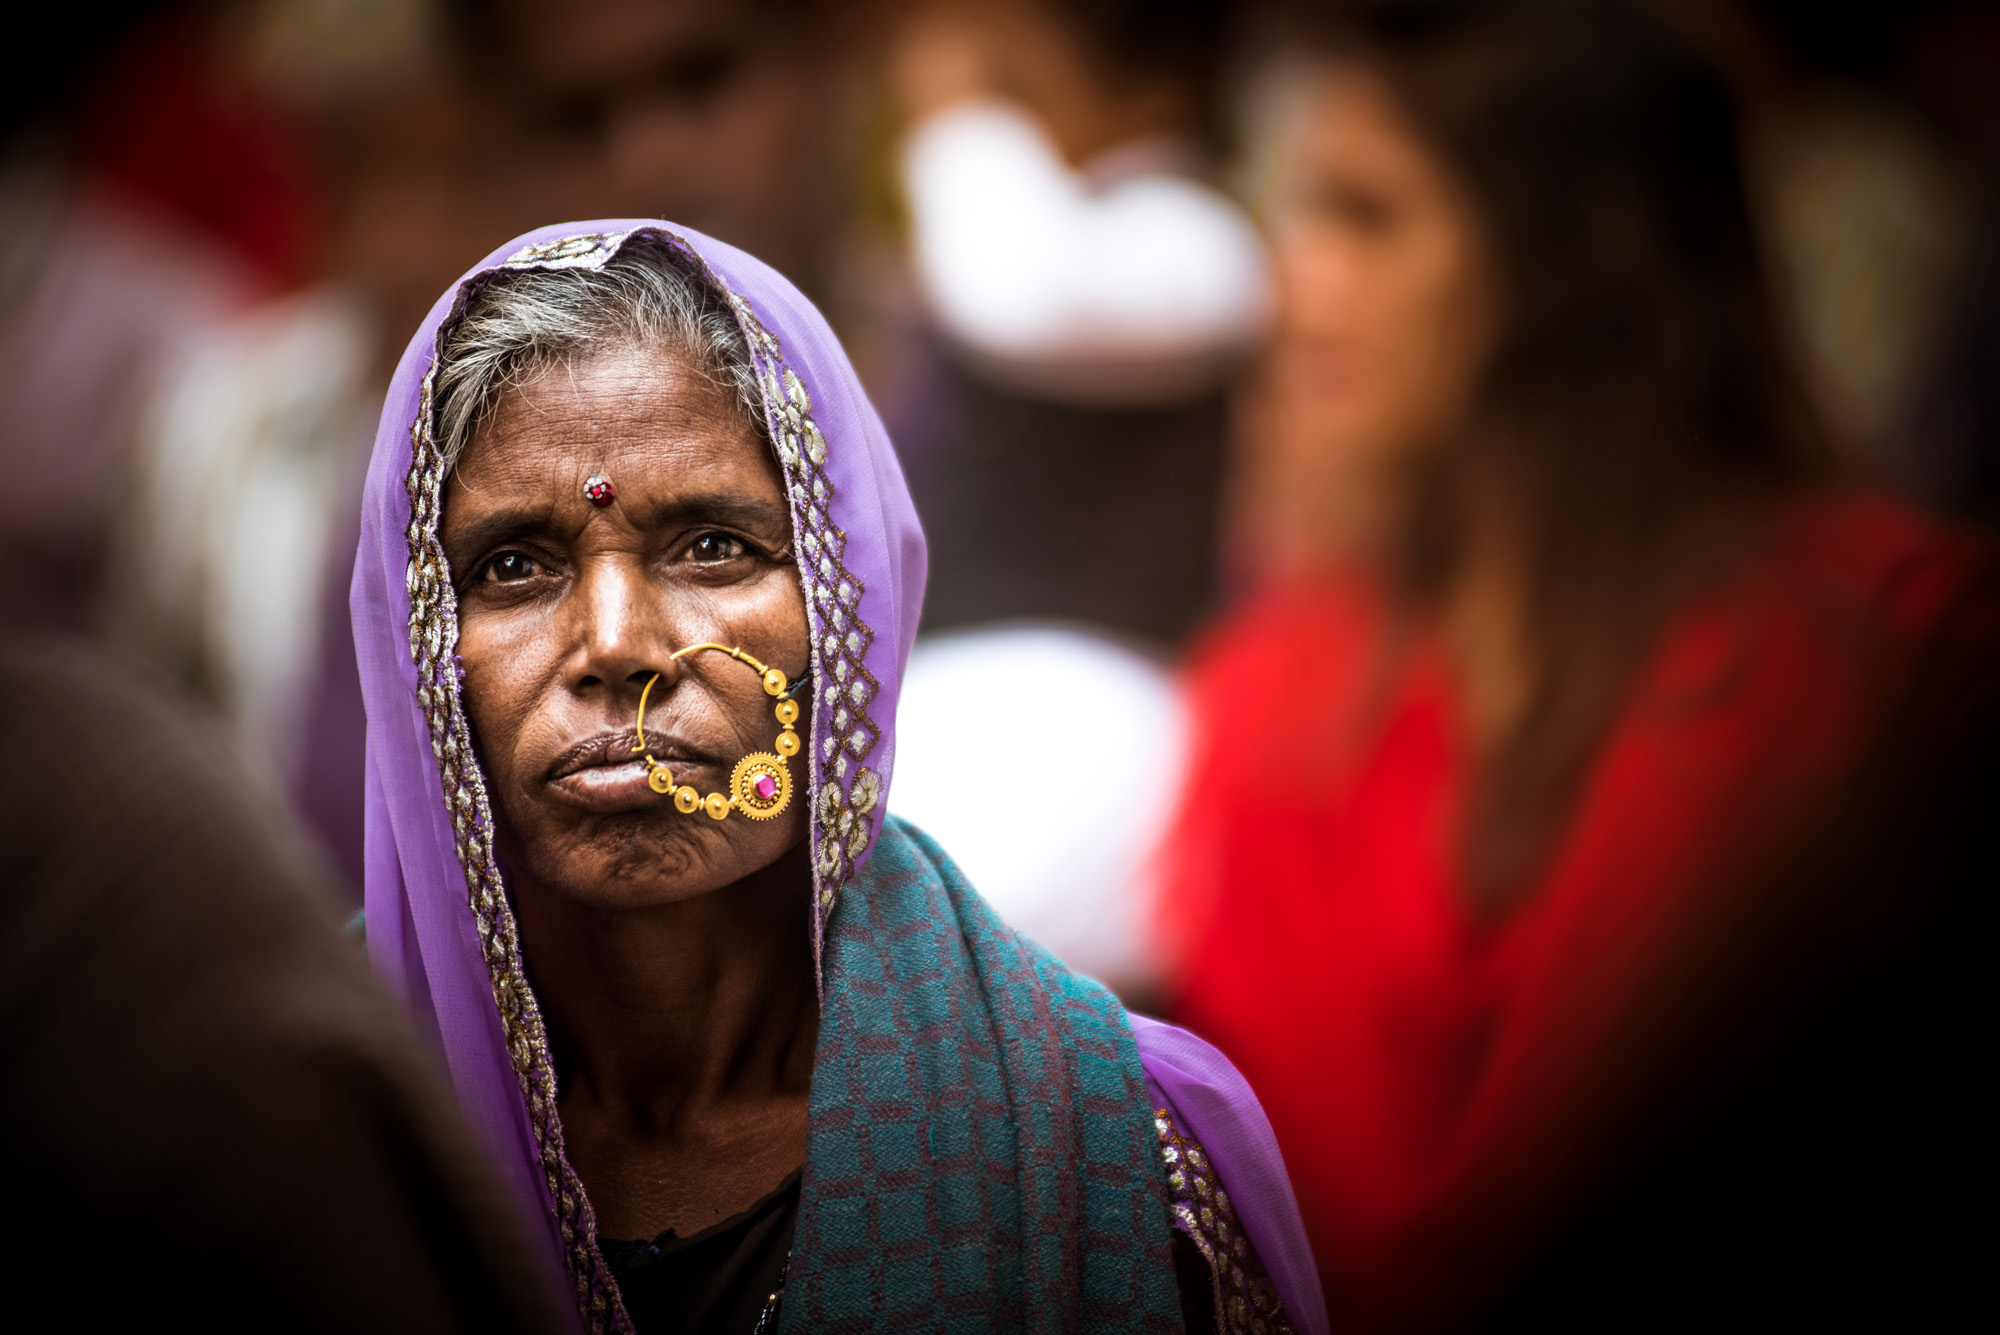 Woman Street Portrait in Rajasthan